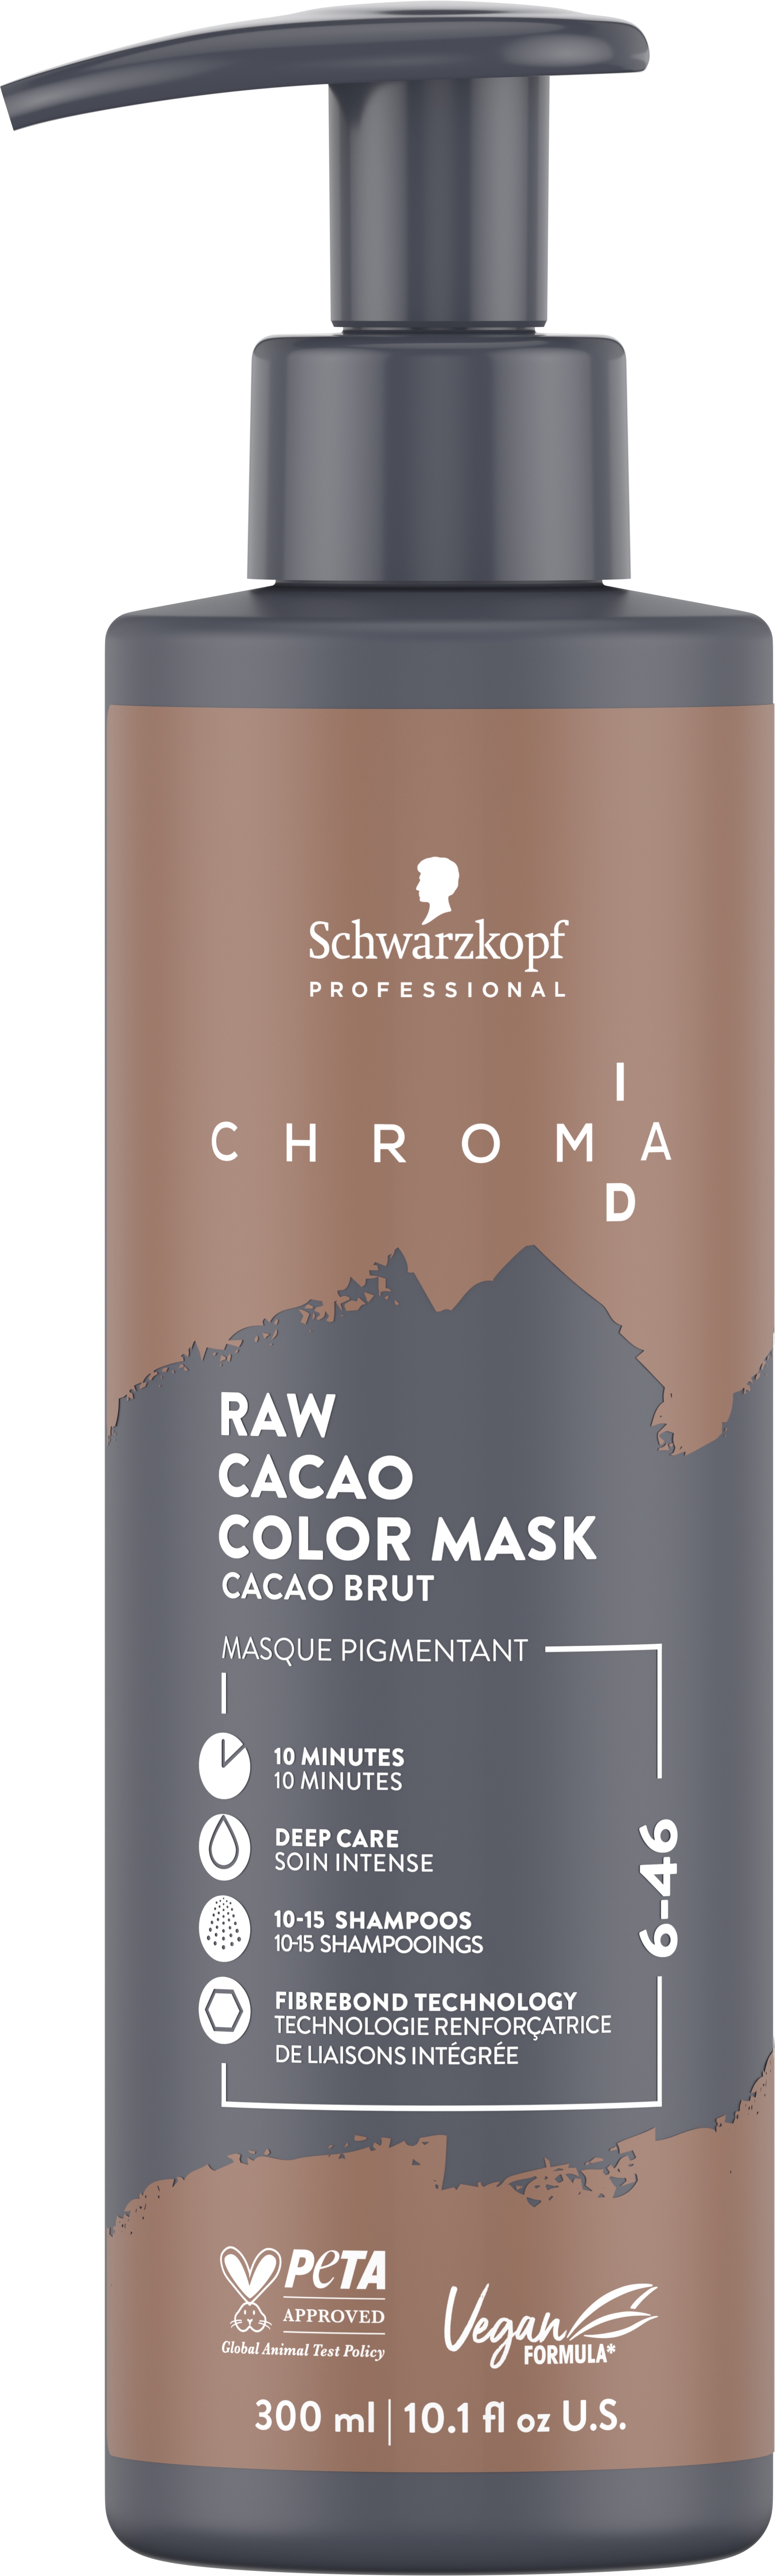 Produktbild von Chroma ID - Bonding Color Mask 6-46 Raw Cacao